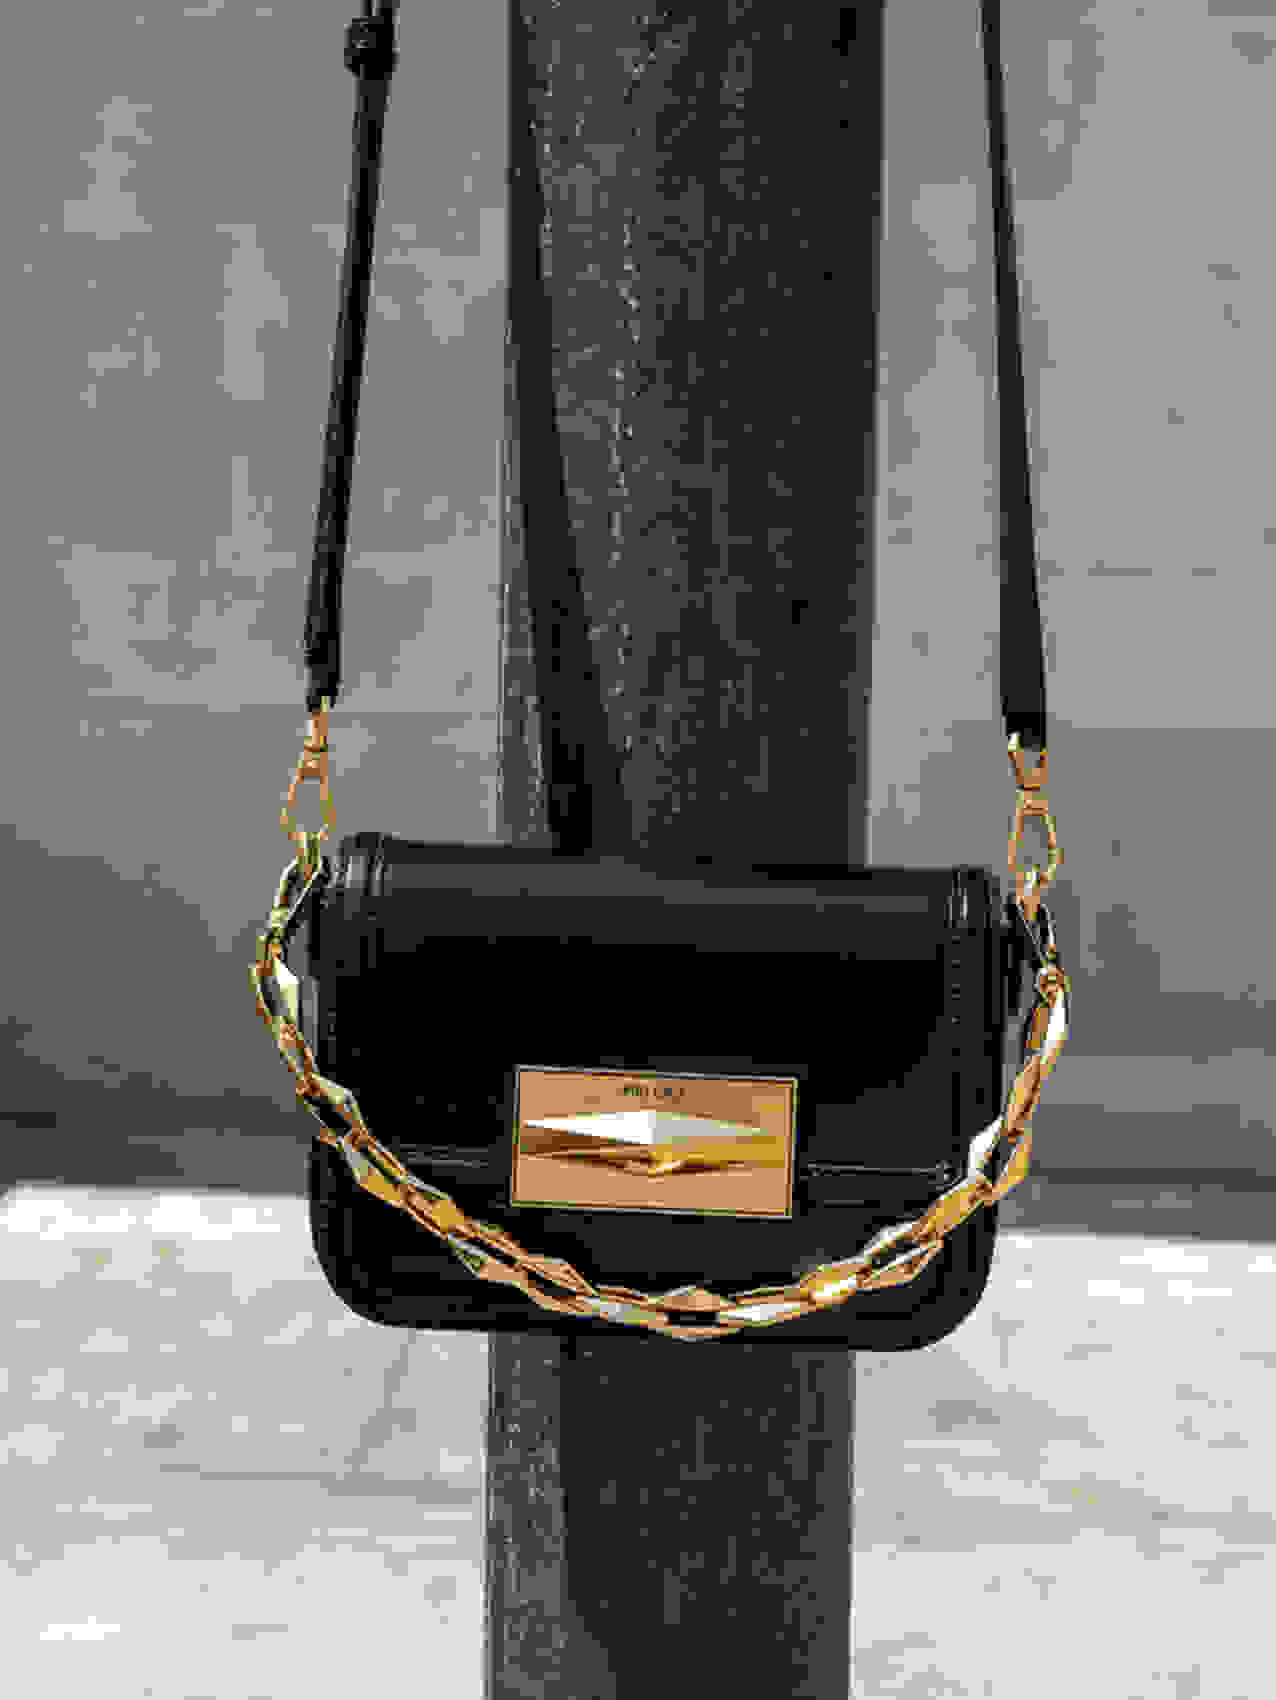 Jimmy Choo Diamond Crossbody handbag in black leather and brANZhed gold hardware.